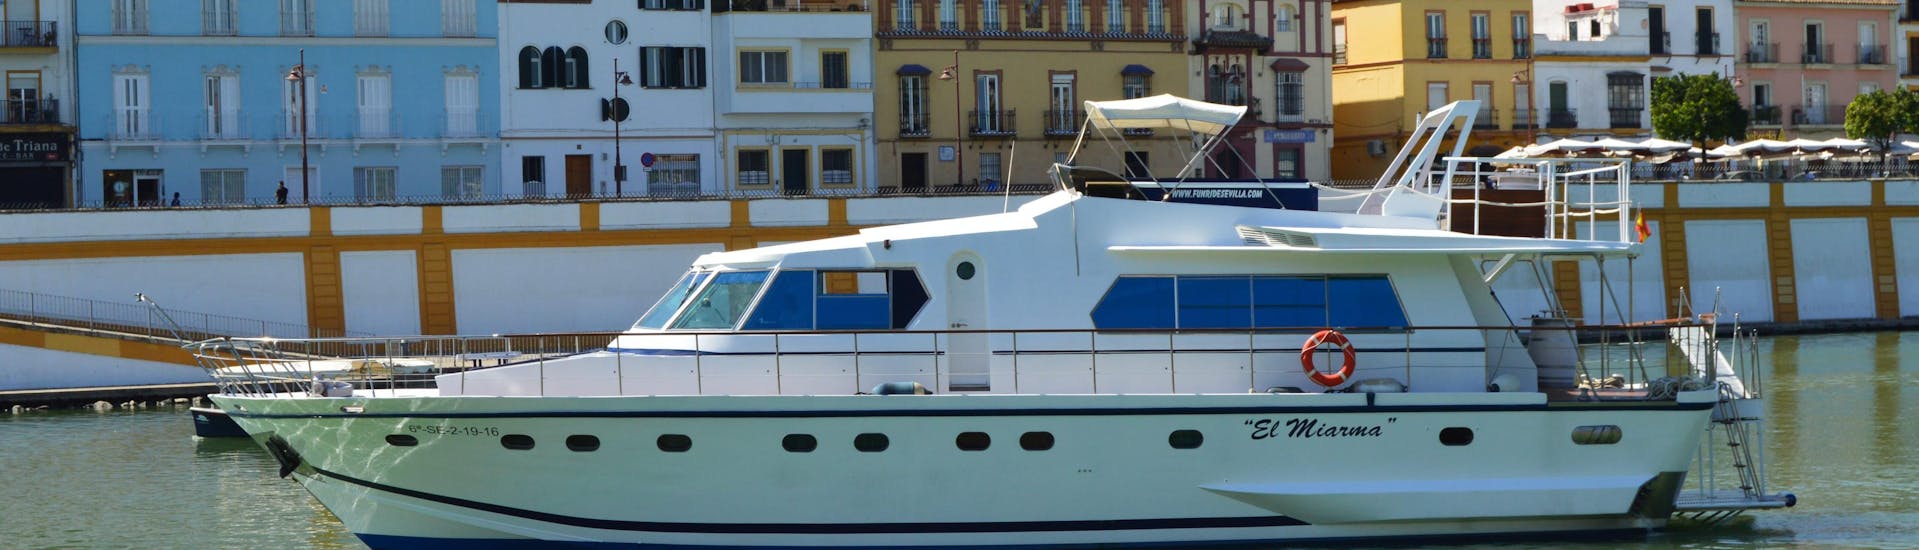 Giro in barca sul fiume Guadalquivir con pranzo di 6 portate.